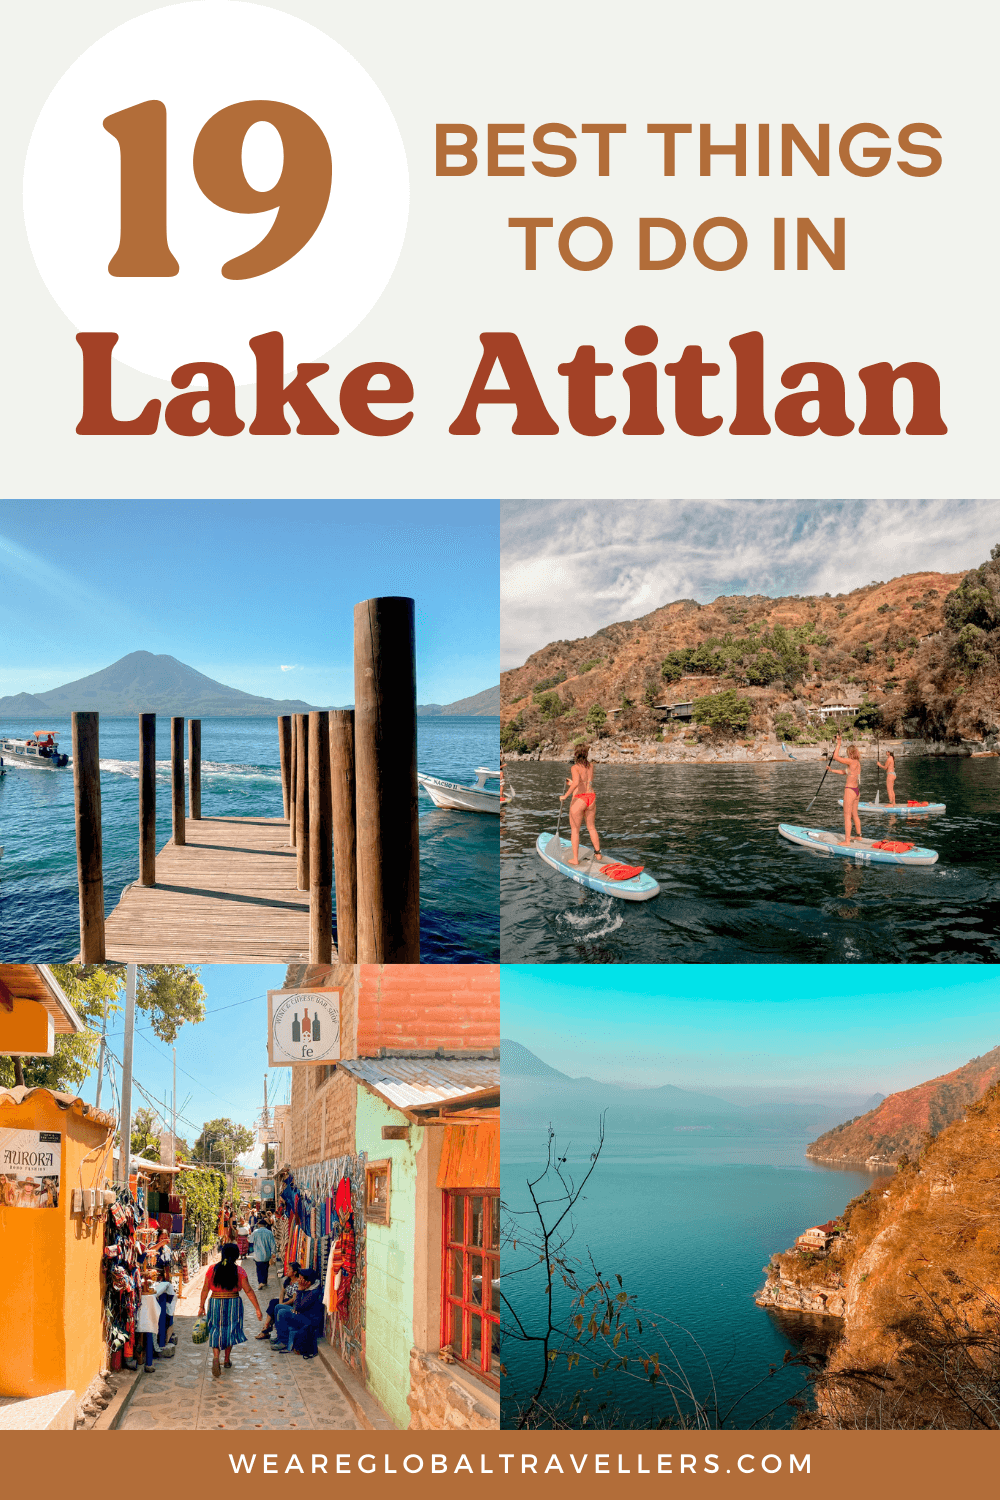 The best things to do in Lake Atitlan, Guatemala